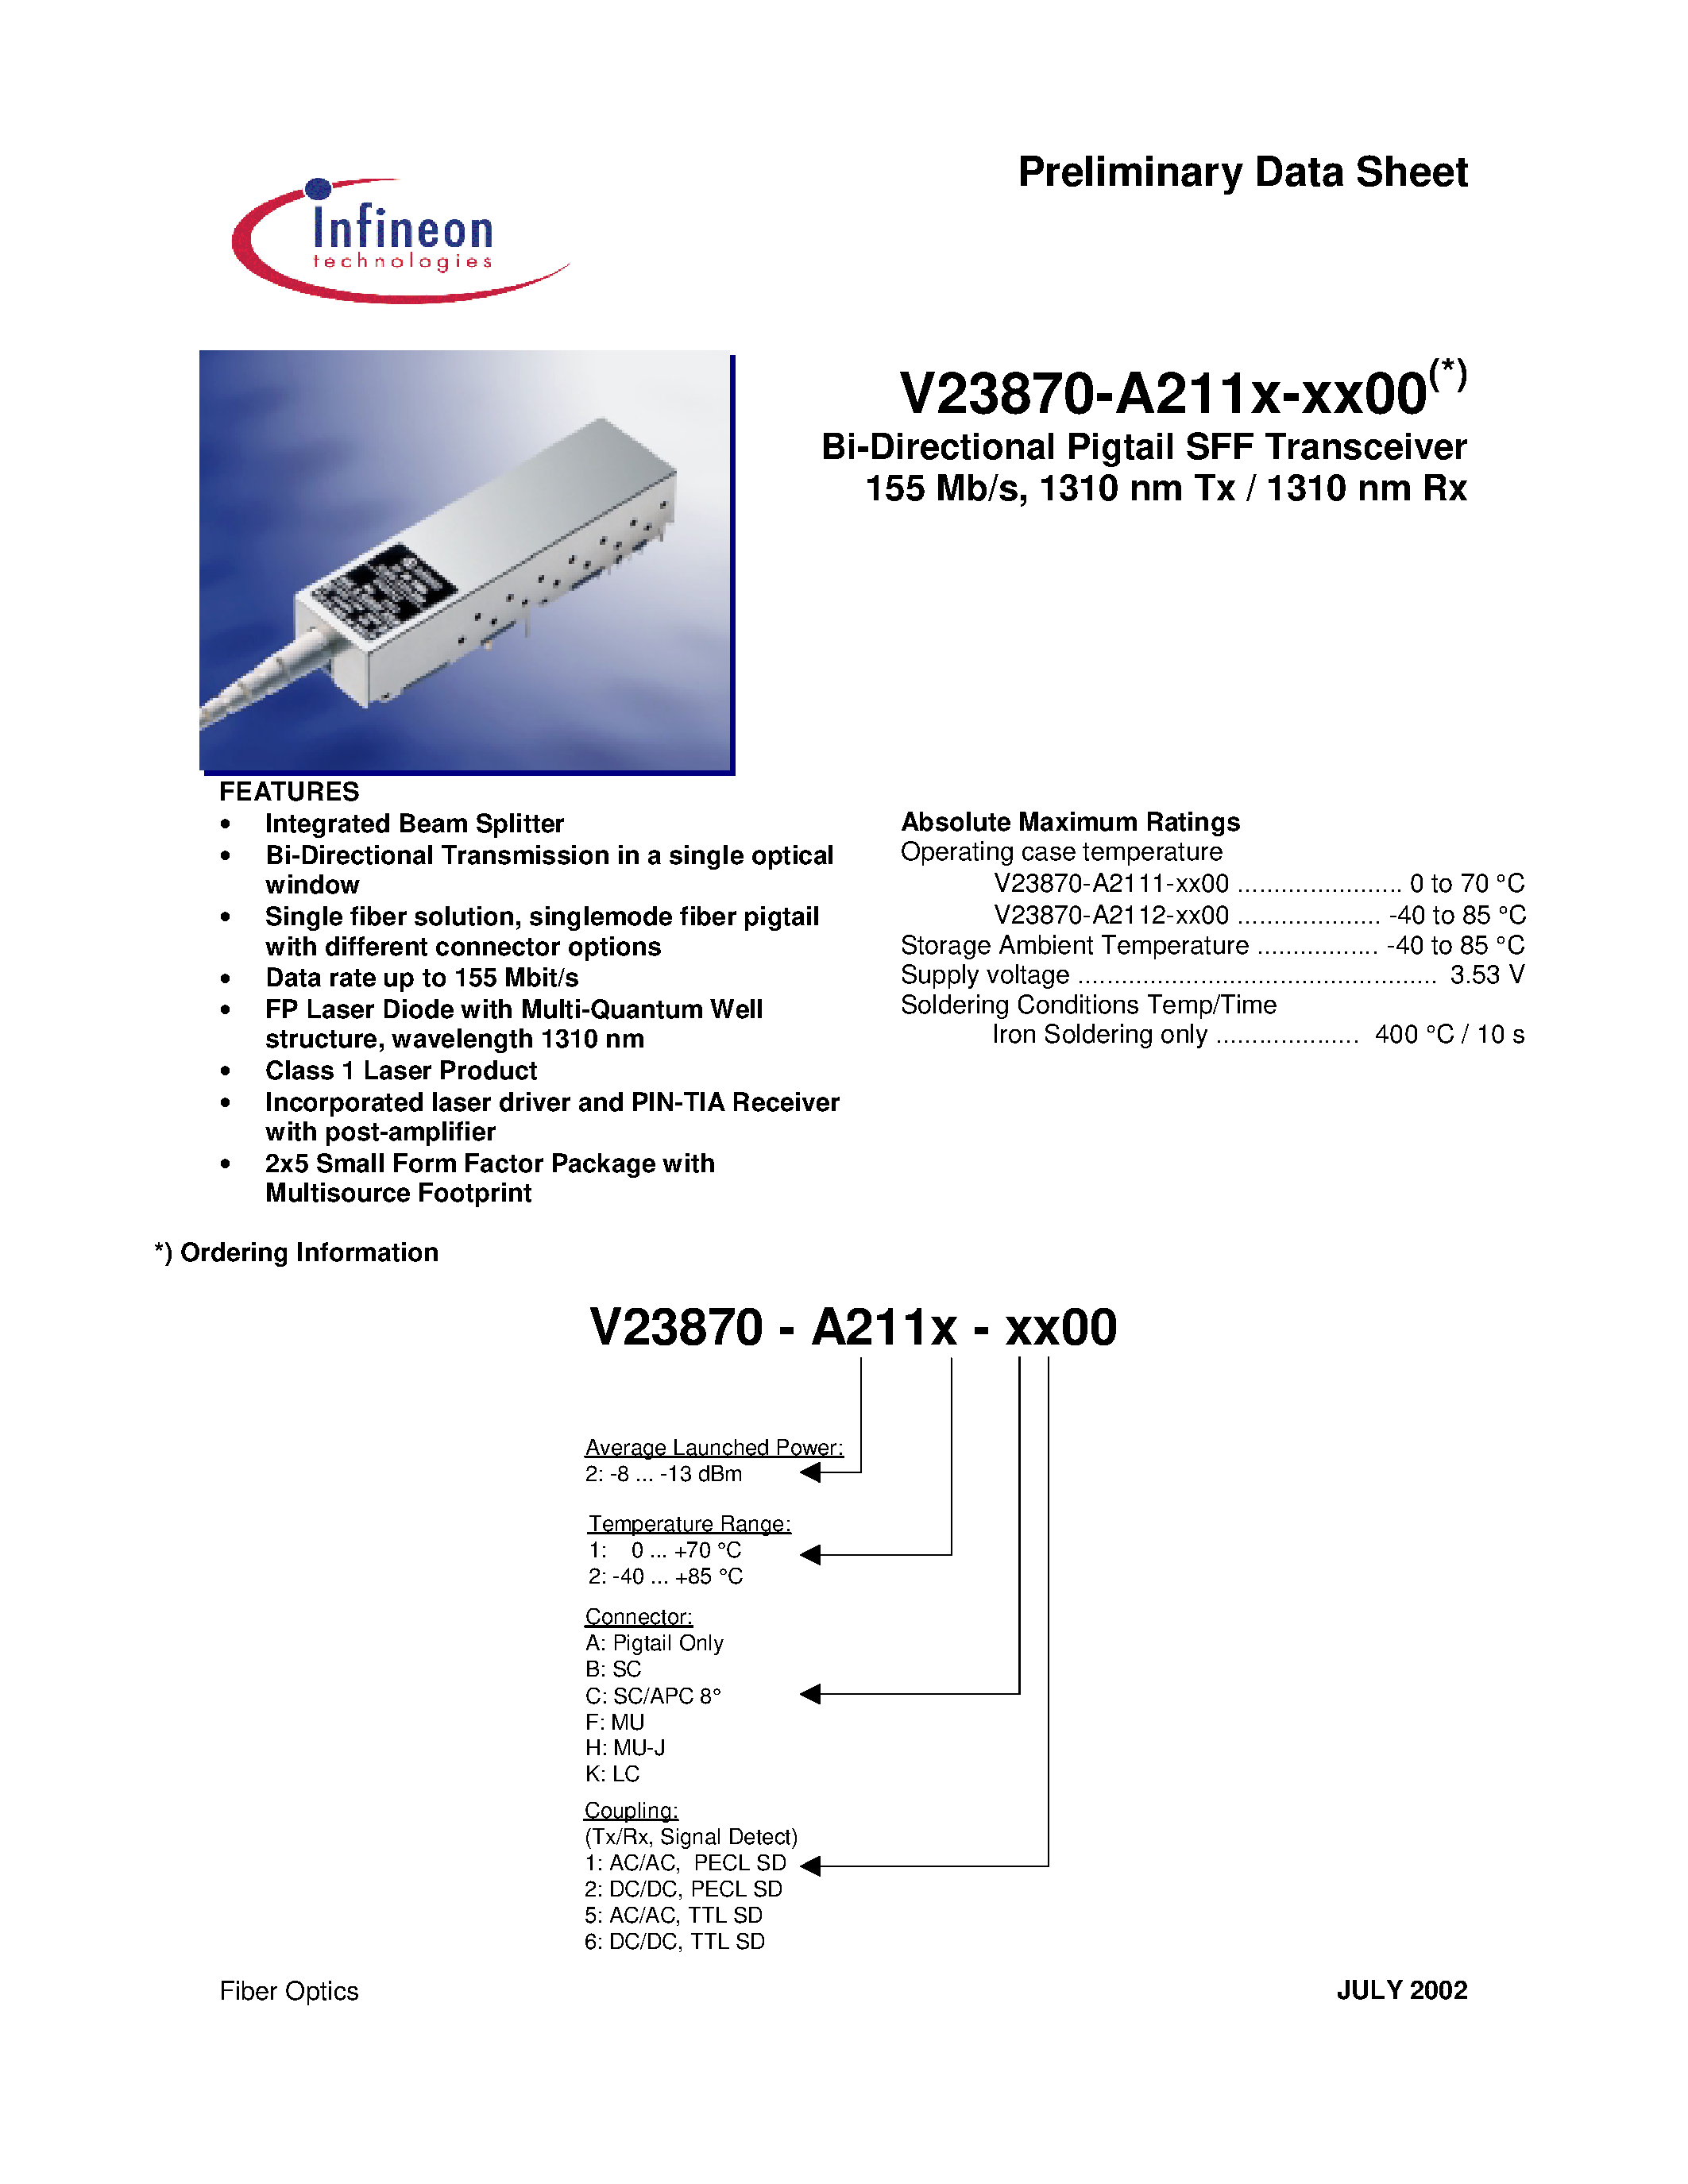 Даташит V23870-A2112-A500 - Bi-Directional Pigtail SFF Transceiver 155 Mb/s/ 1310 nm Tx / 1310 nm Rx страница 1